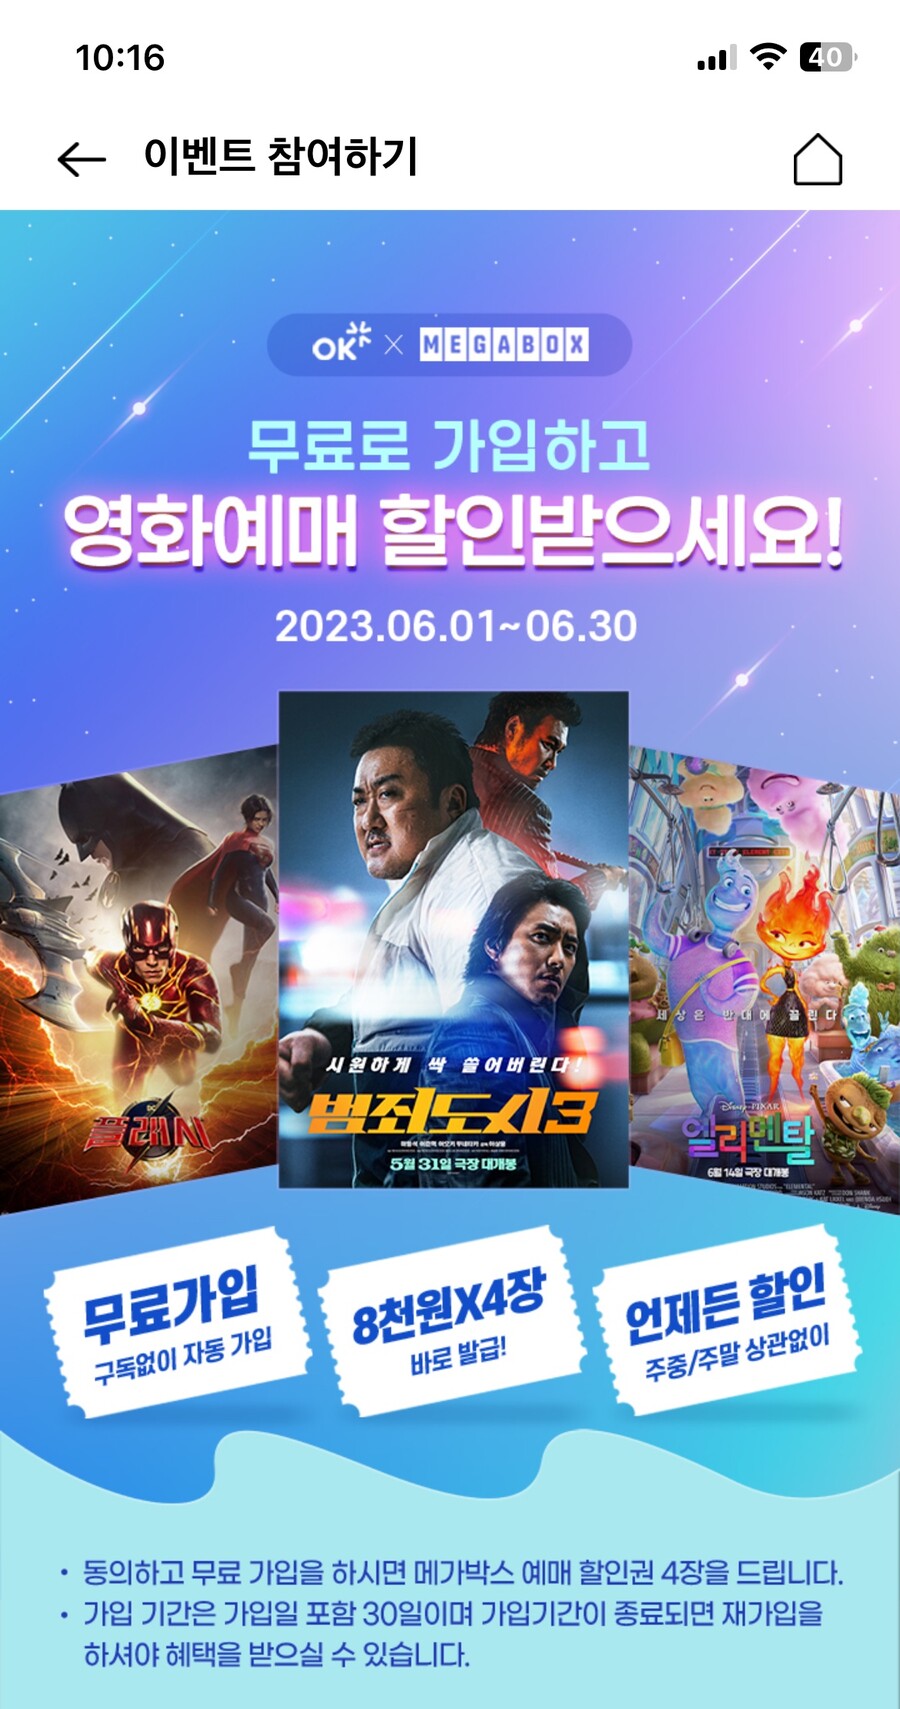 EastSideStory - [OK캐쉬백] 메가박스 2D 영화 예매 (8,000원/무료)